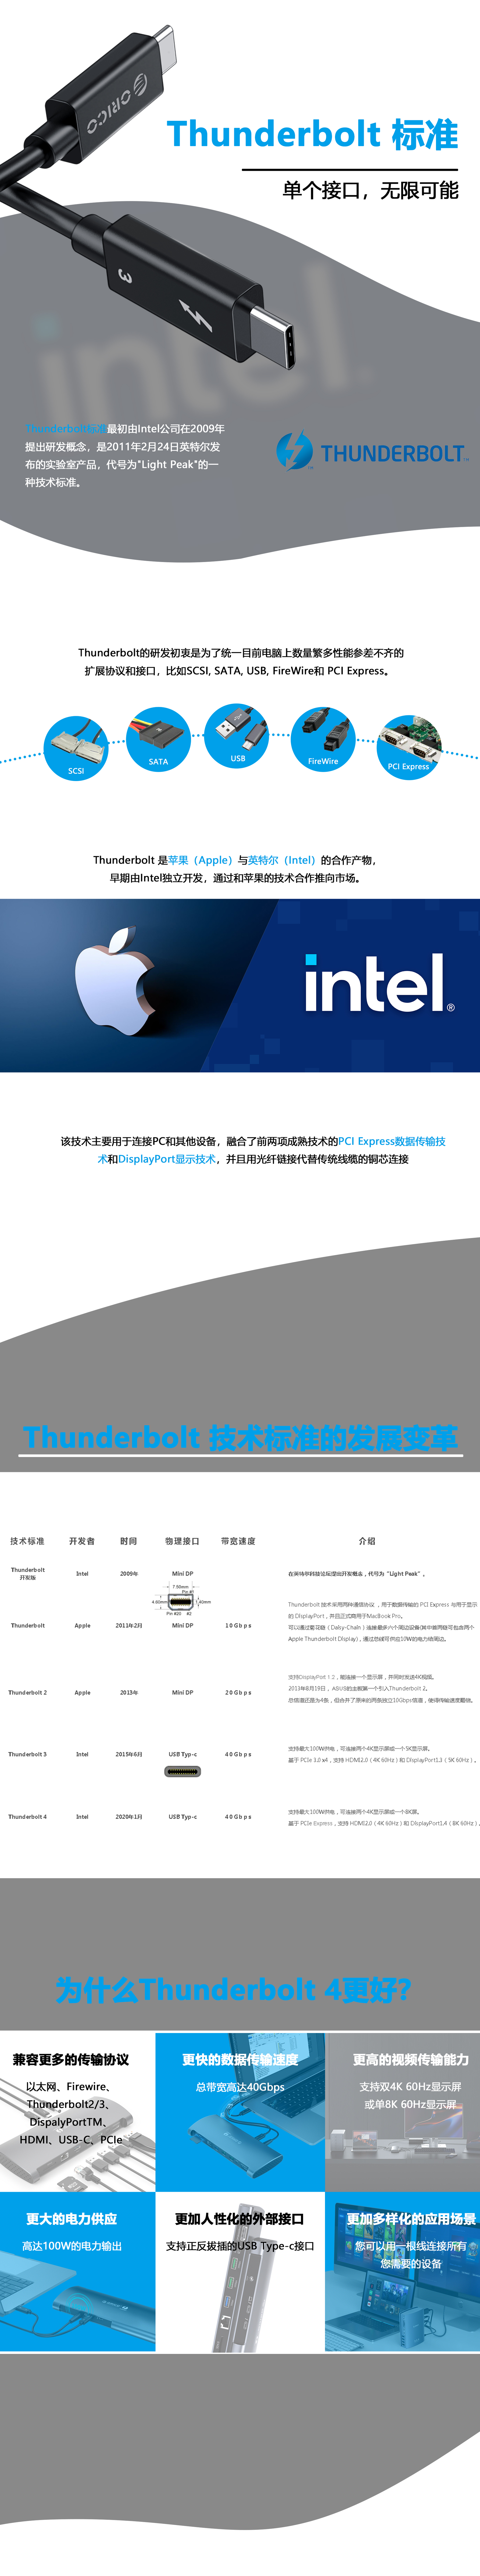 Thunderbolt 3 技术标准.jpg